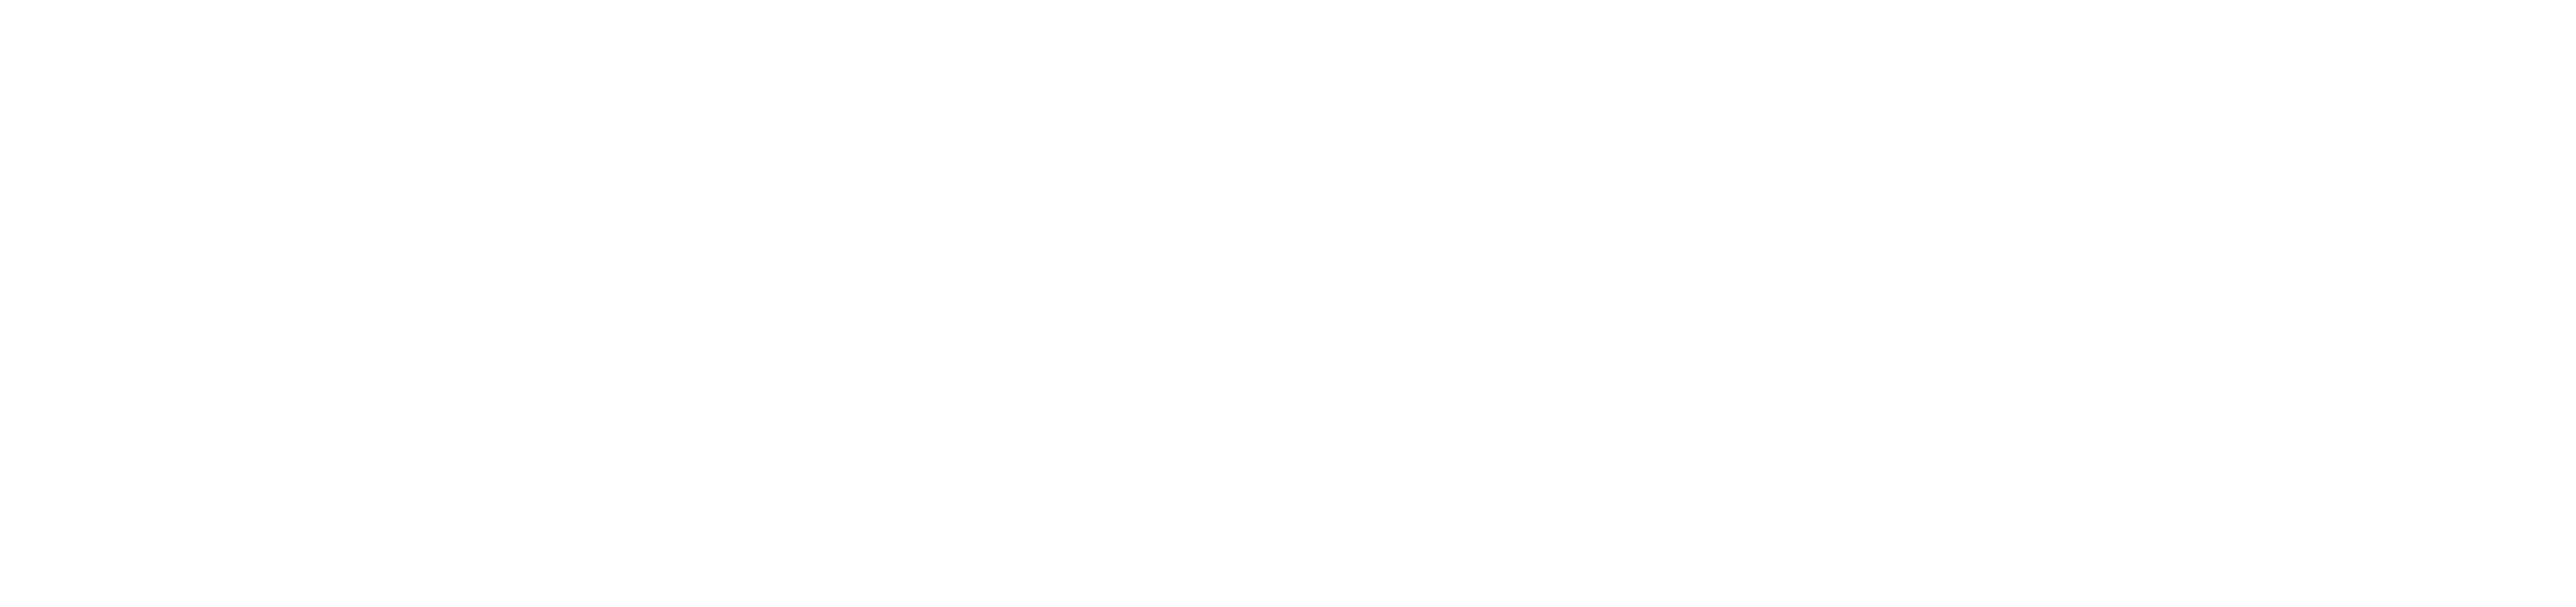 W.D. Colledge - logo 1 c